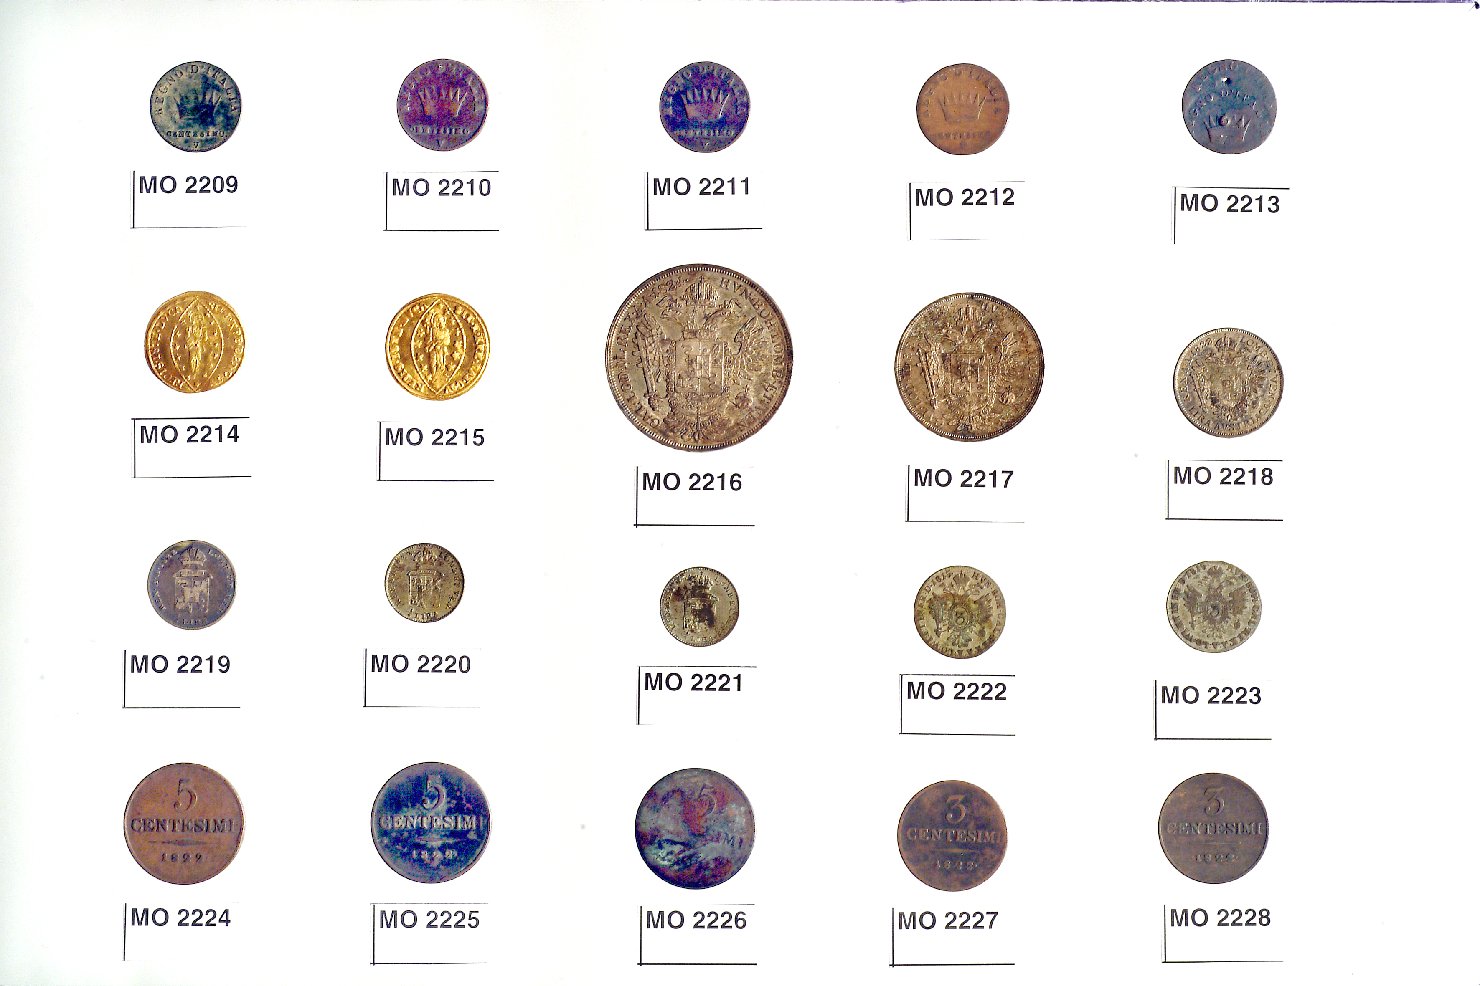 moneta - 3 carantani - bottega veneta (sec. XIX d.C)